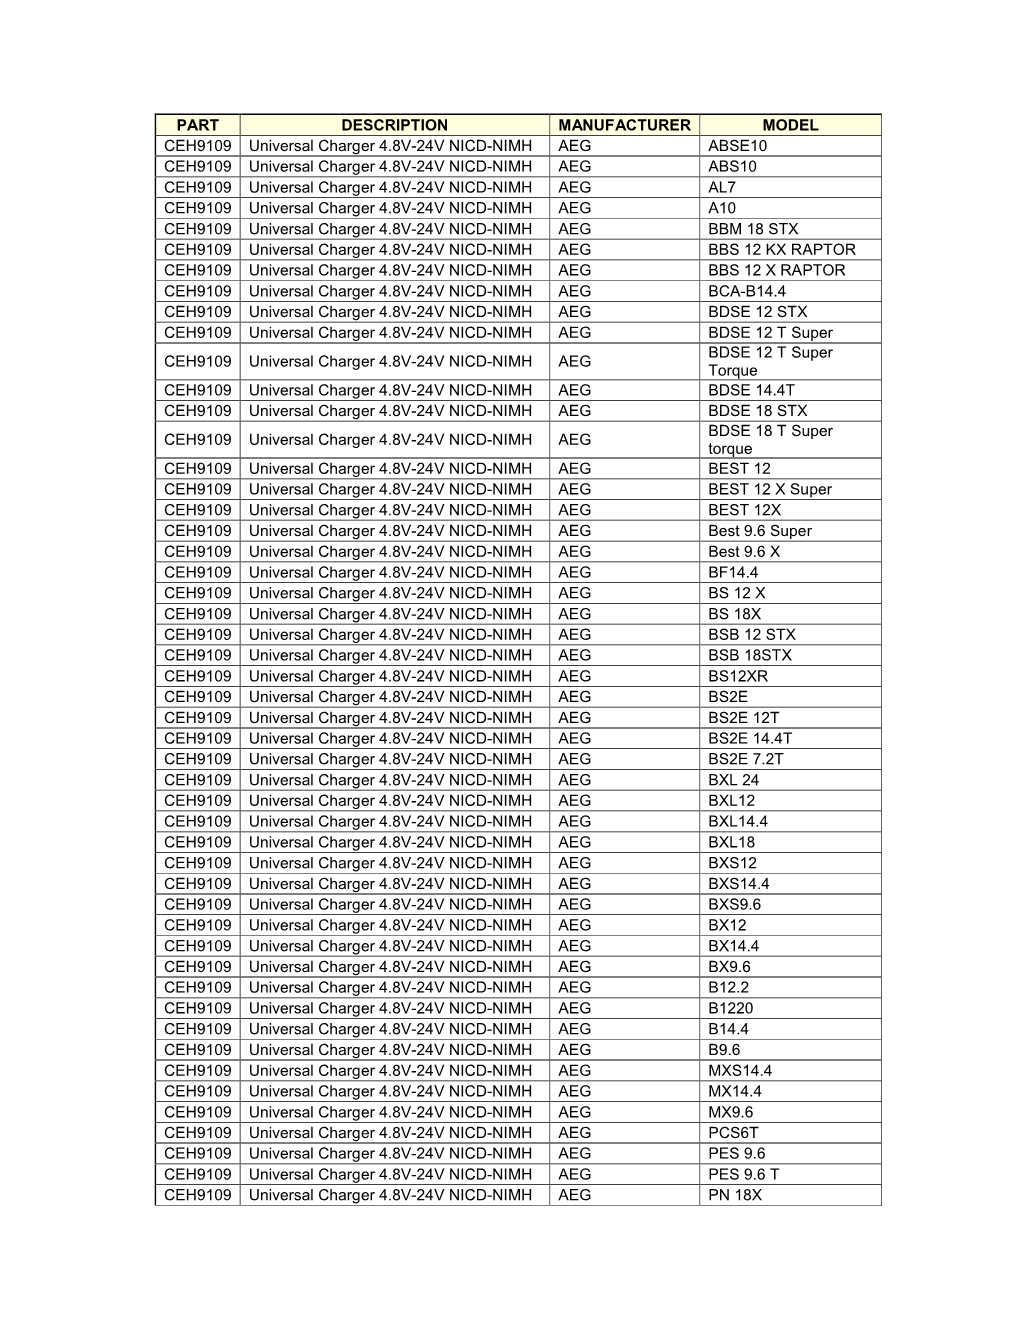 PART DESCRIPTION MANUFACTURER MODEL CEH9109 Universal Charger 4.8V-24V NICD-NIMH AEG ABSE10 CEH9109 Universal Charger 4.8V-24V N